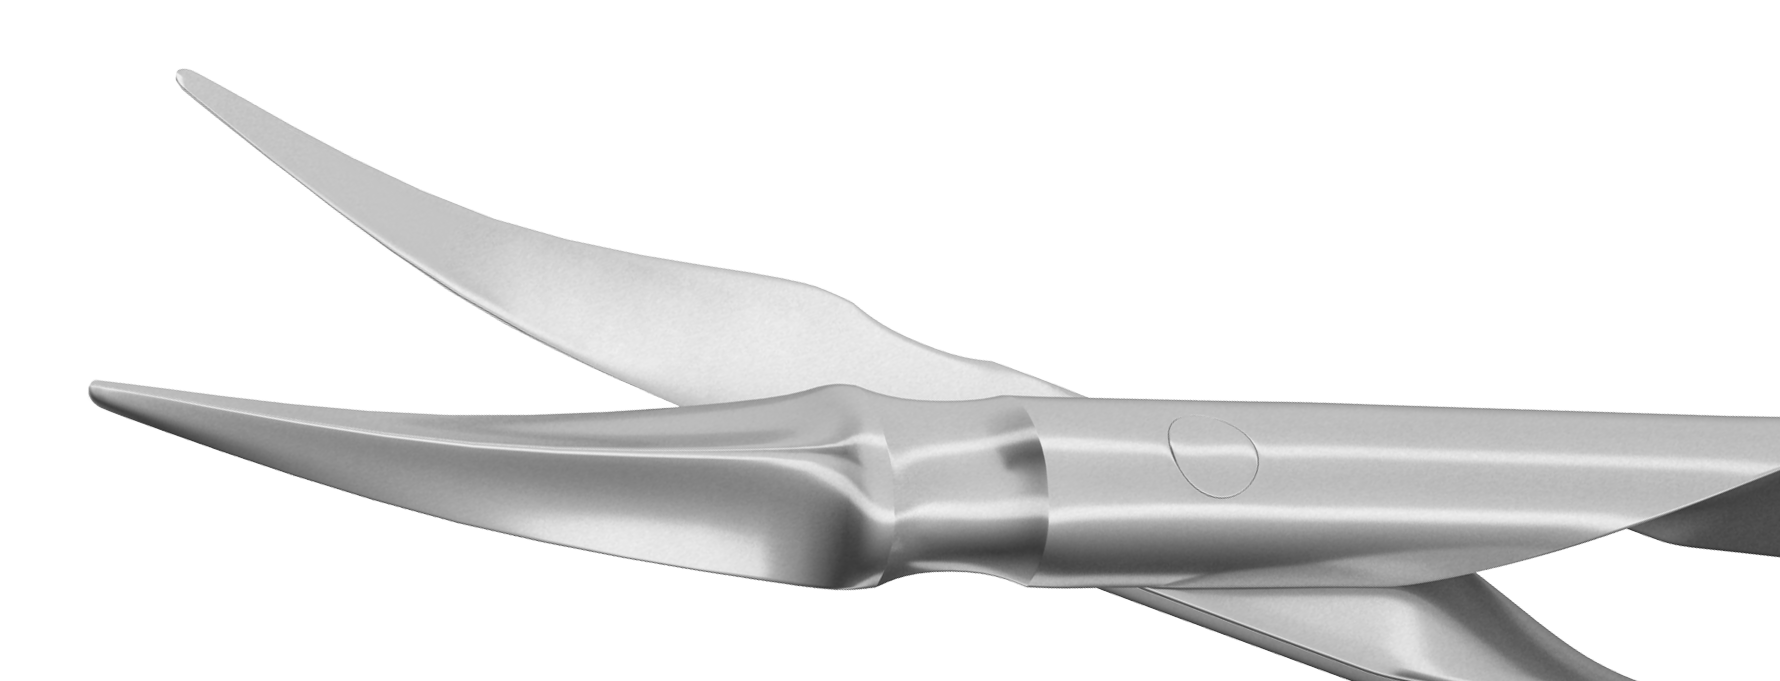 999R 11-052D Disposable Vannas Capsulotomy Scissors, Curved, Sharp Tips, 6 per Box